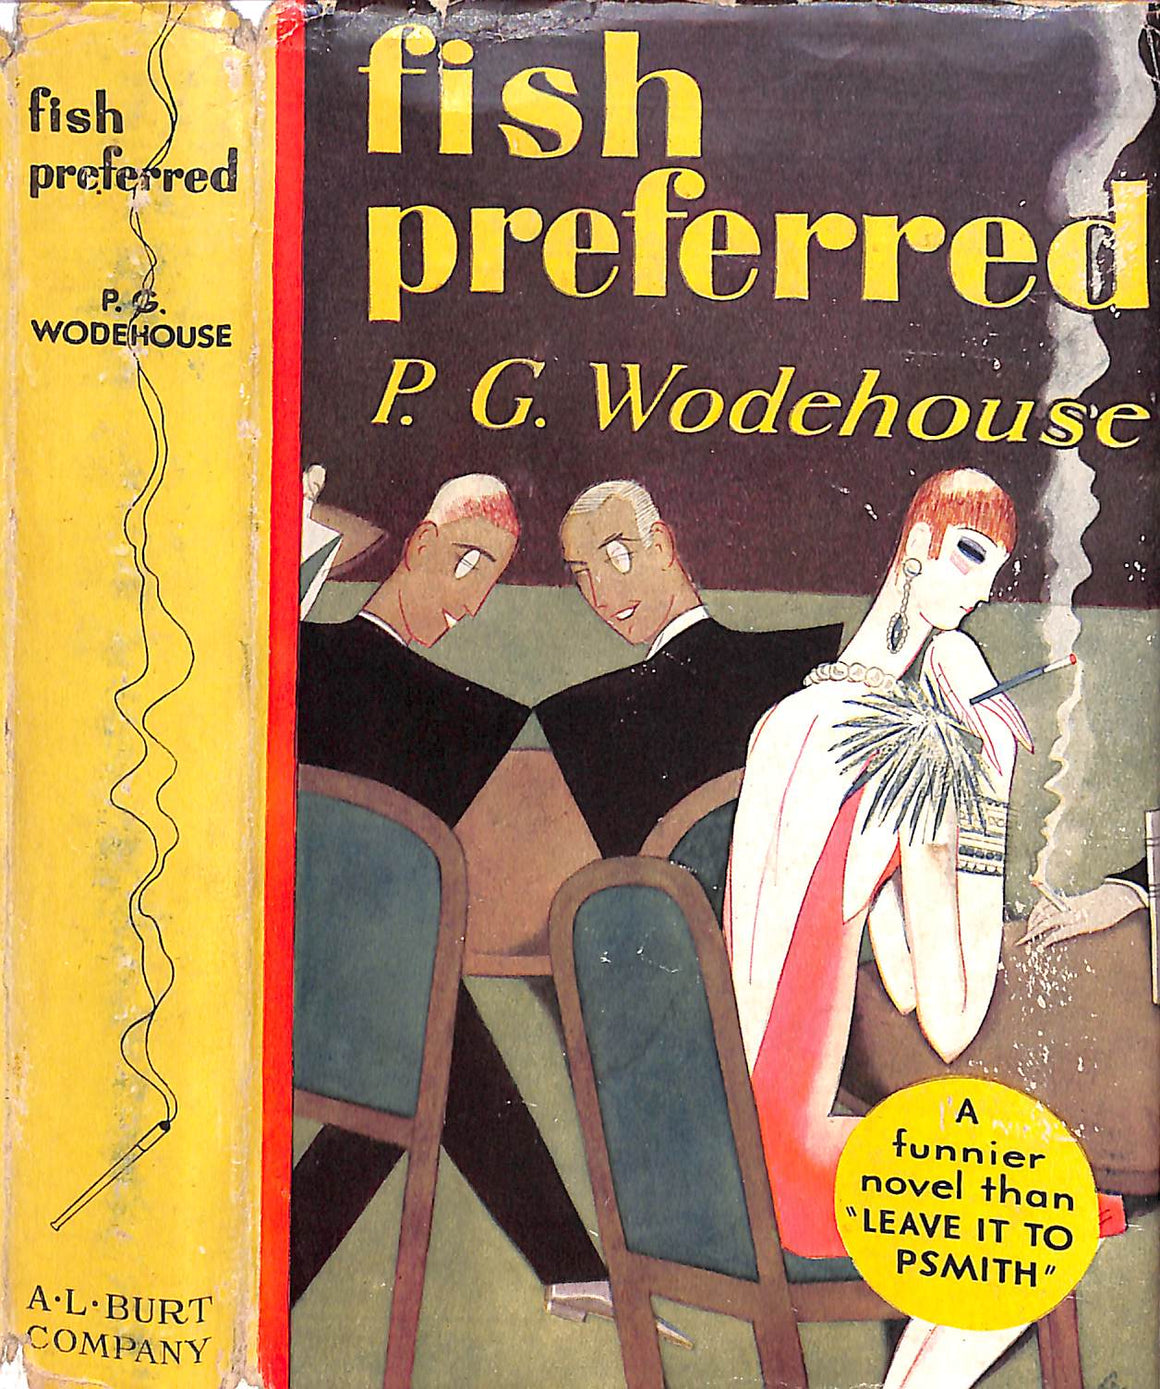 "Fish Preferred" 1929 WODEHOUSE, P.G.